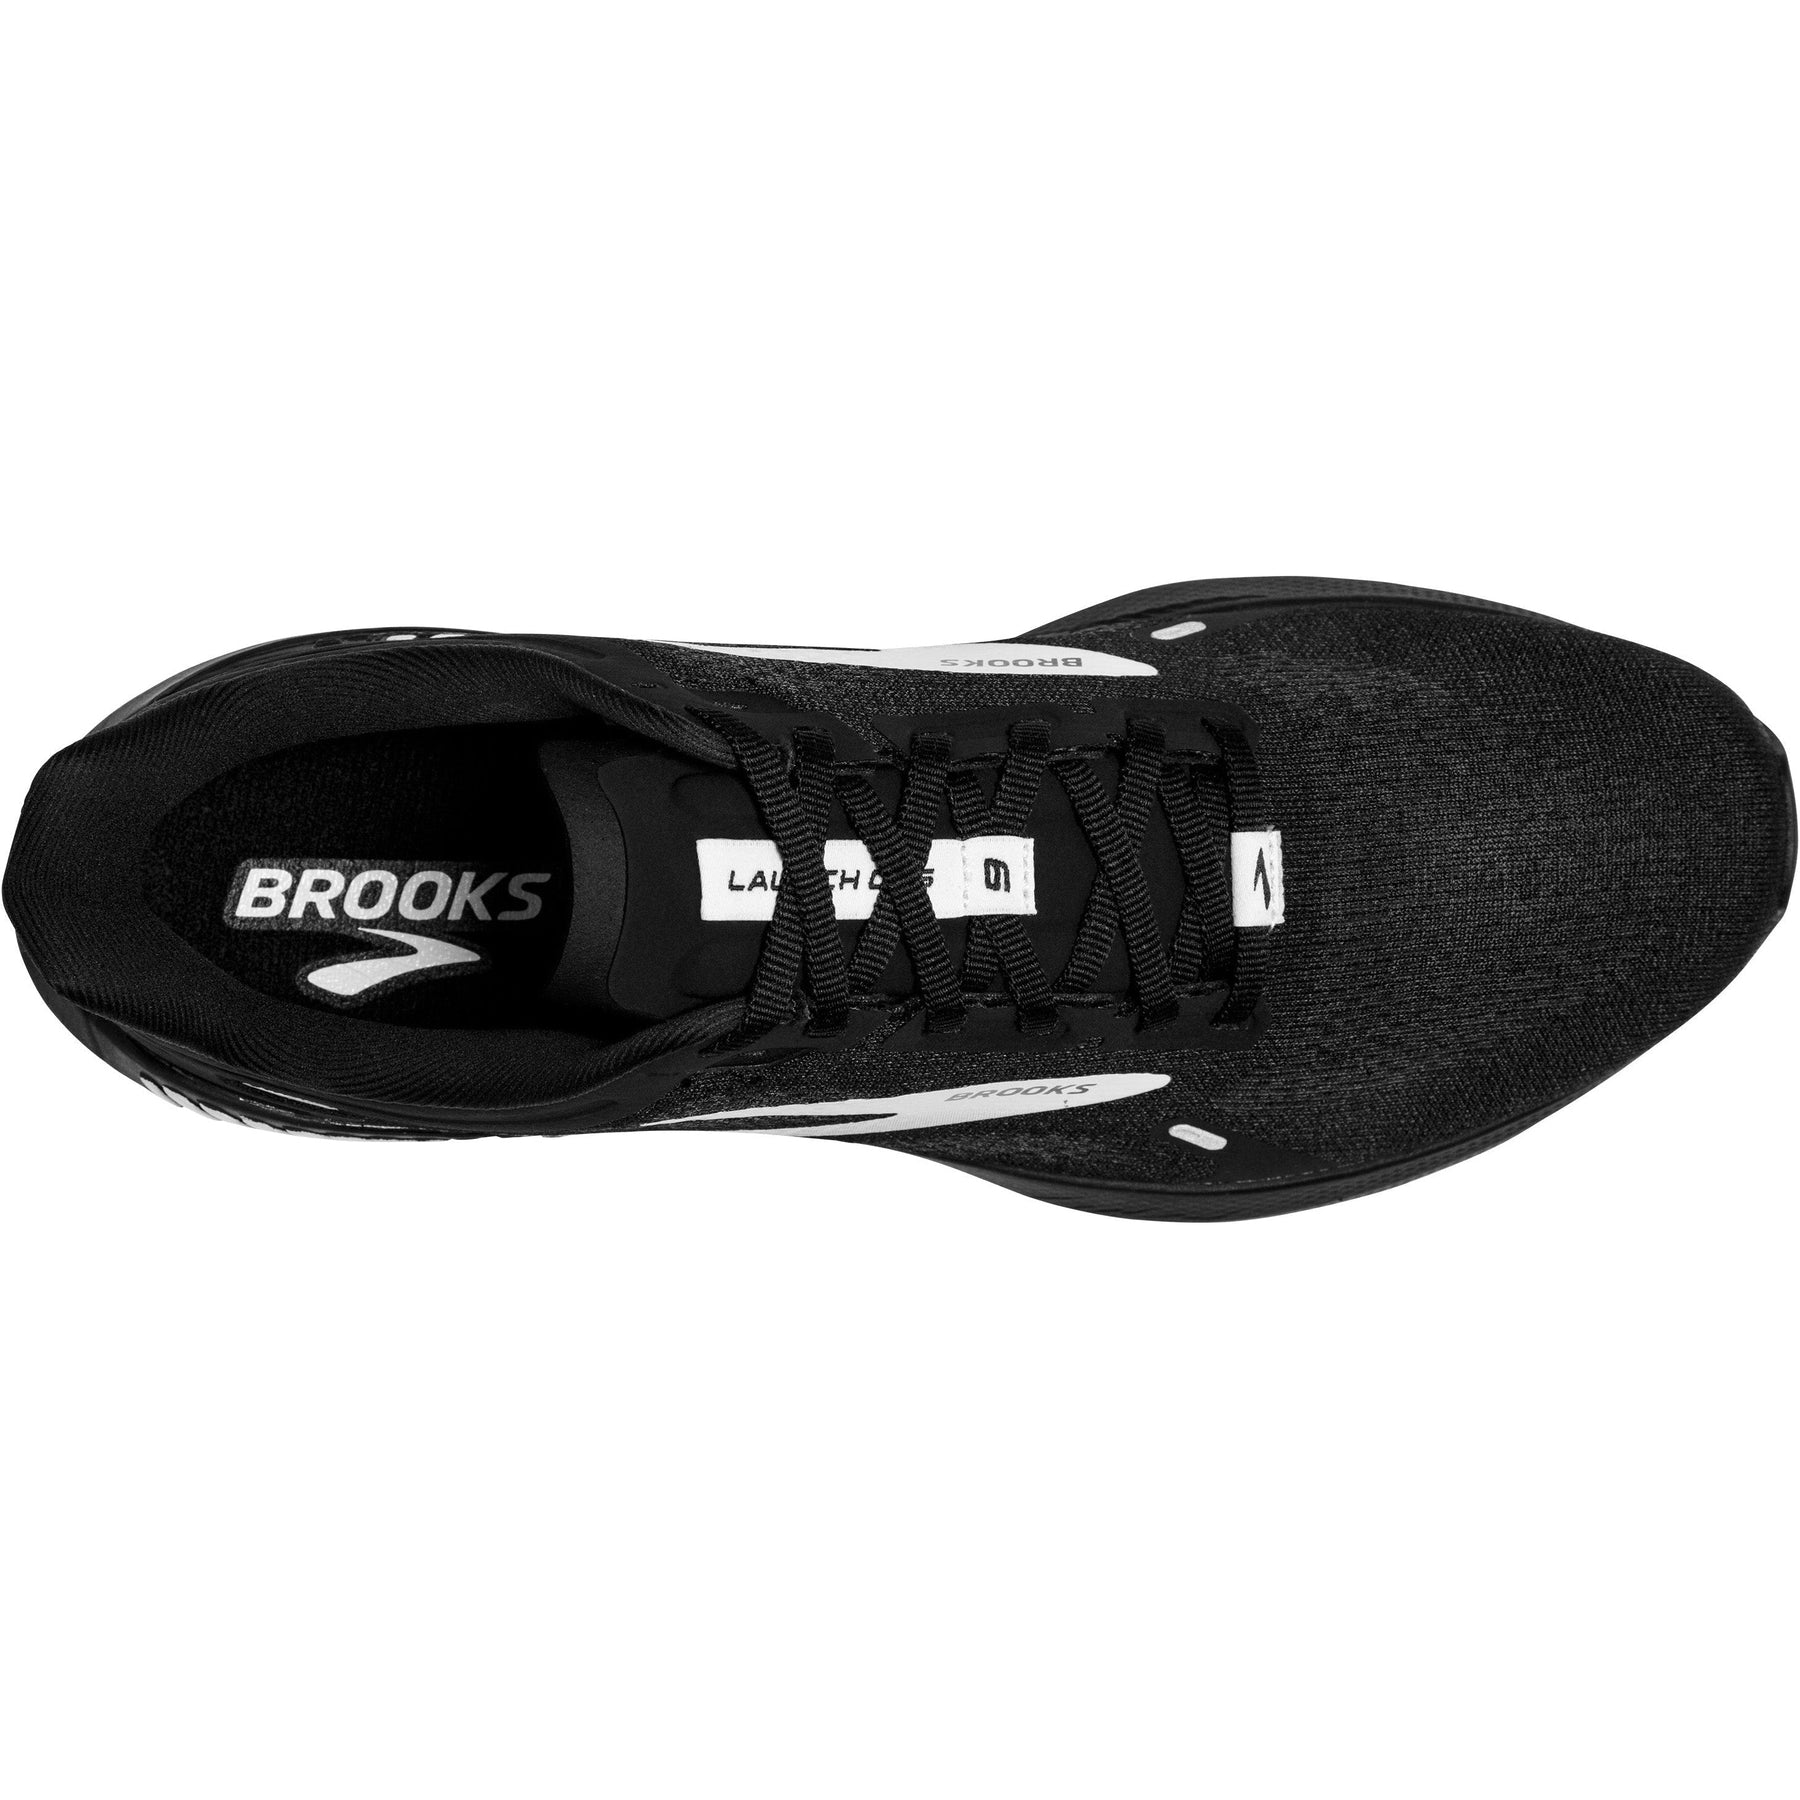 Brooks-Men's Brooks Launch GTS 9-Pacers Running